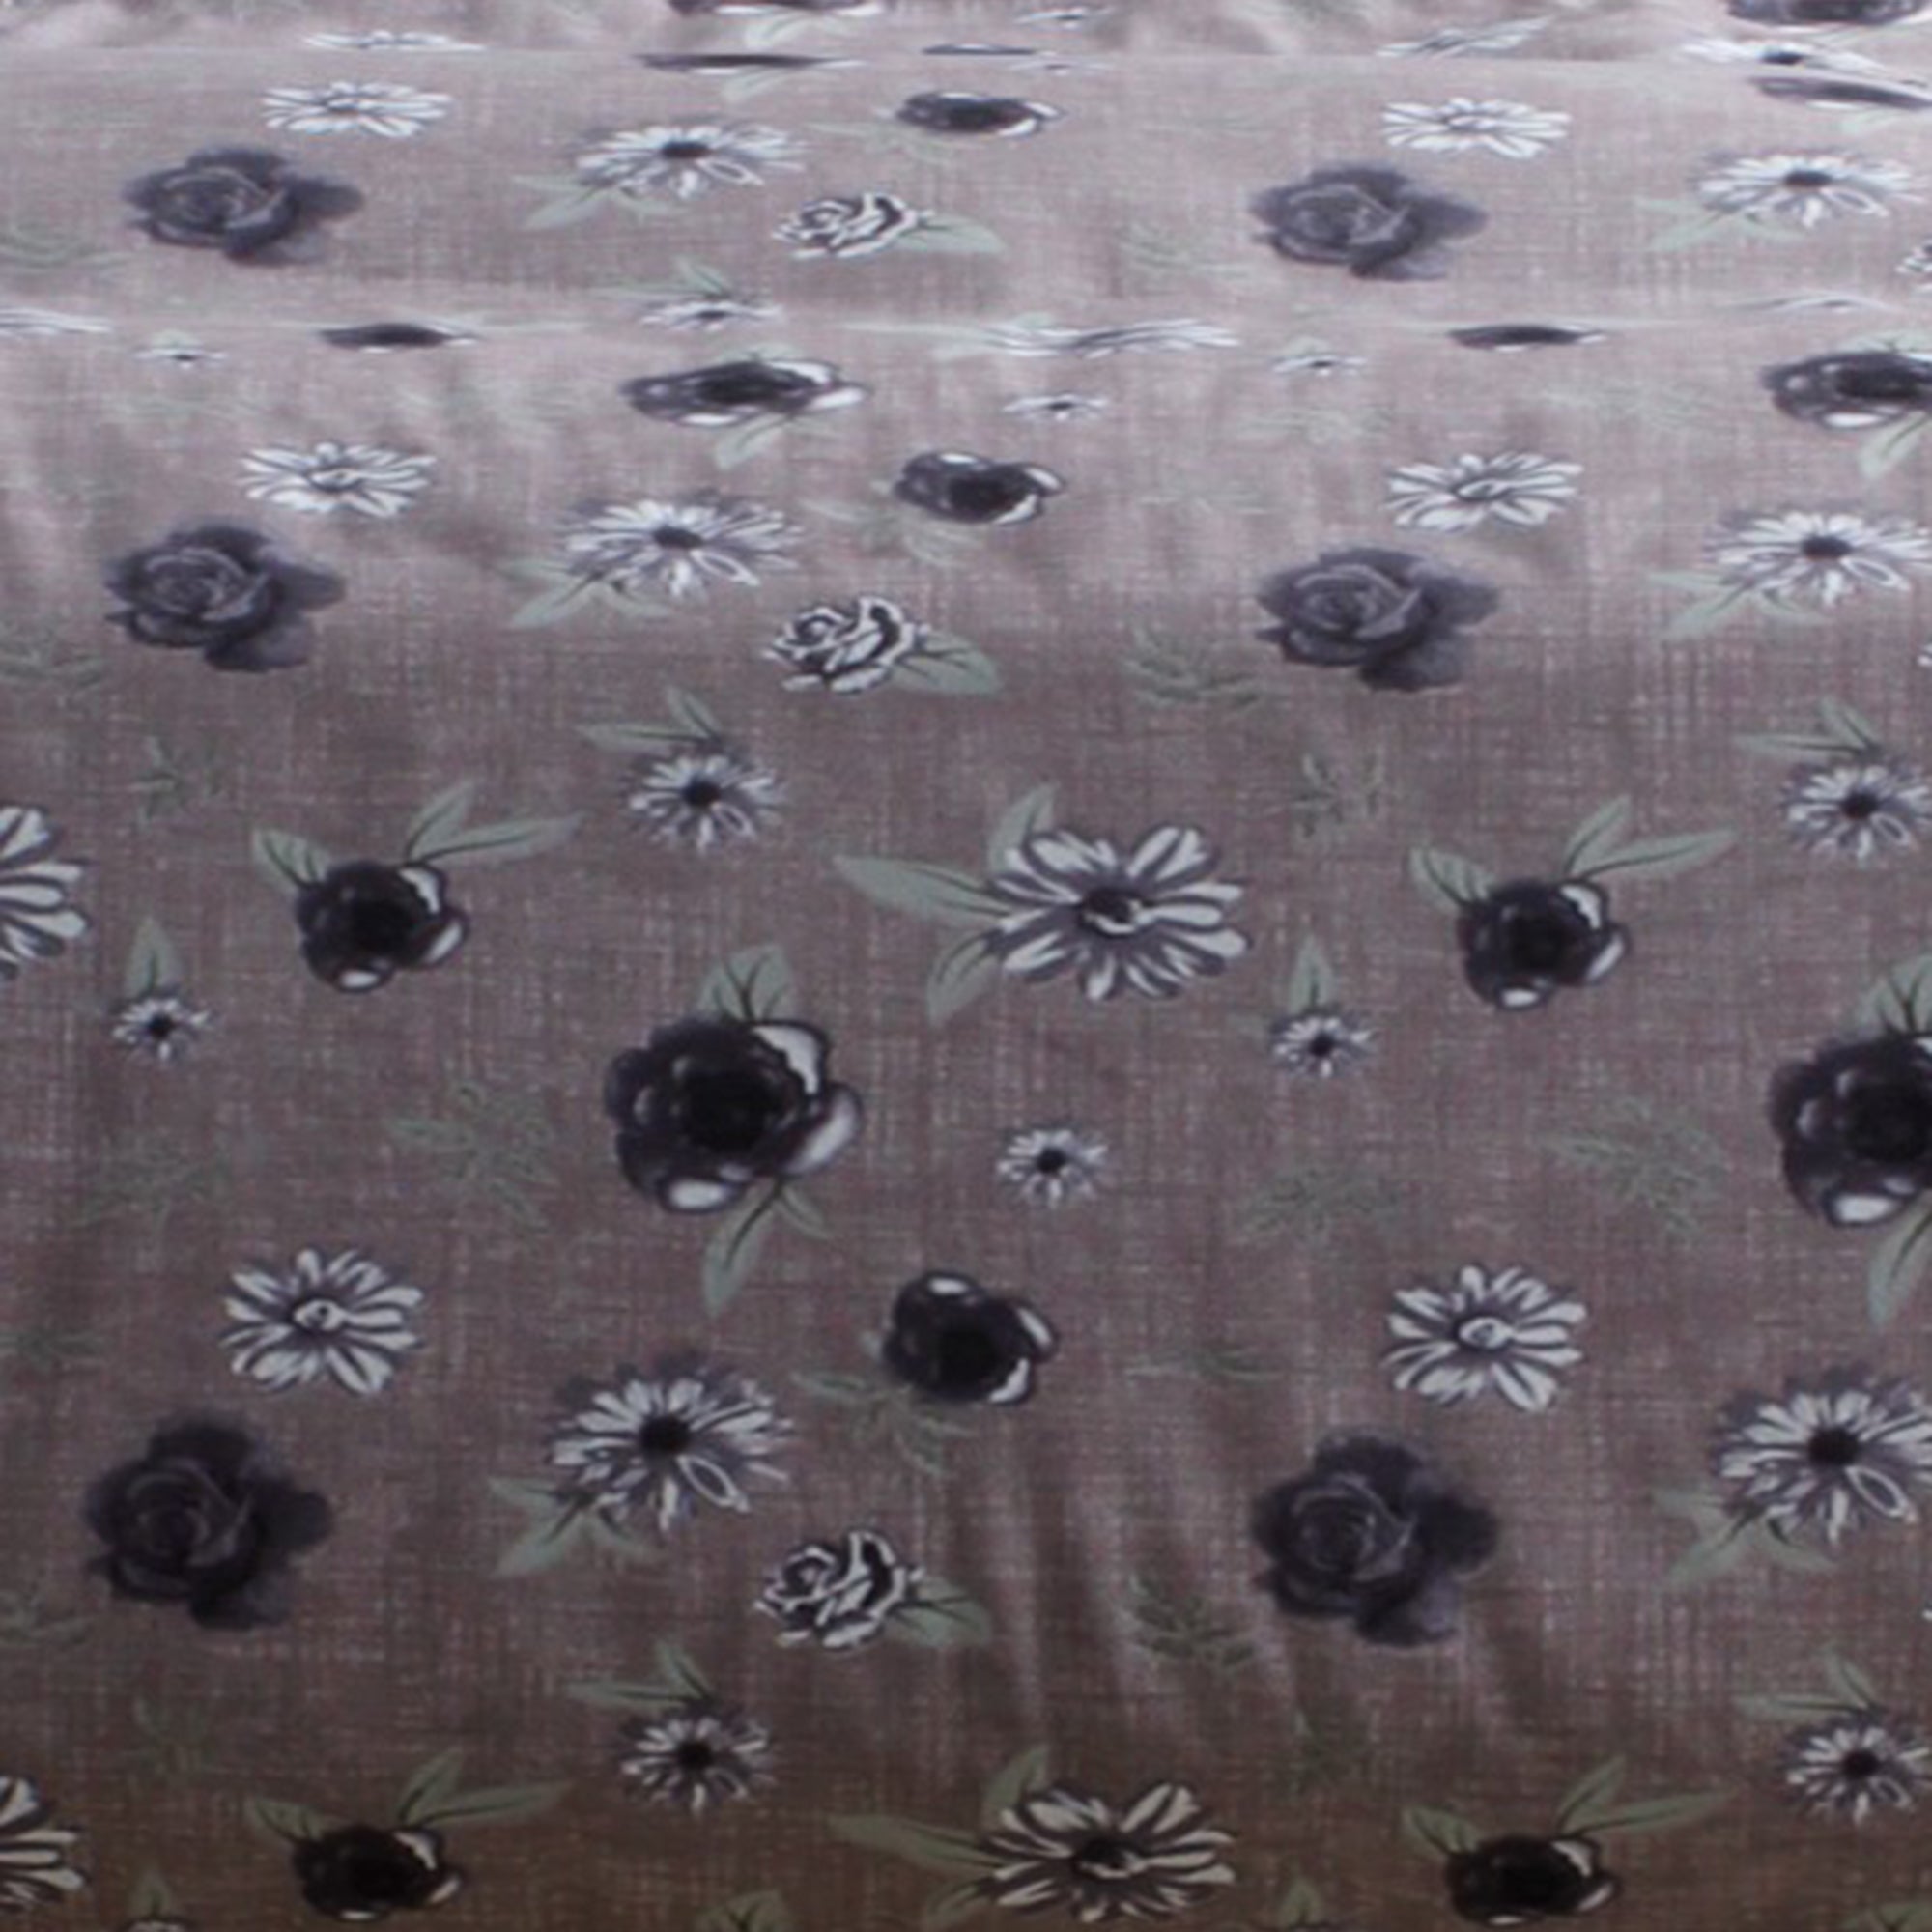 Studio Luxurious 144 TC 100% Cotton Brown Double Bedsheet